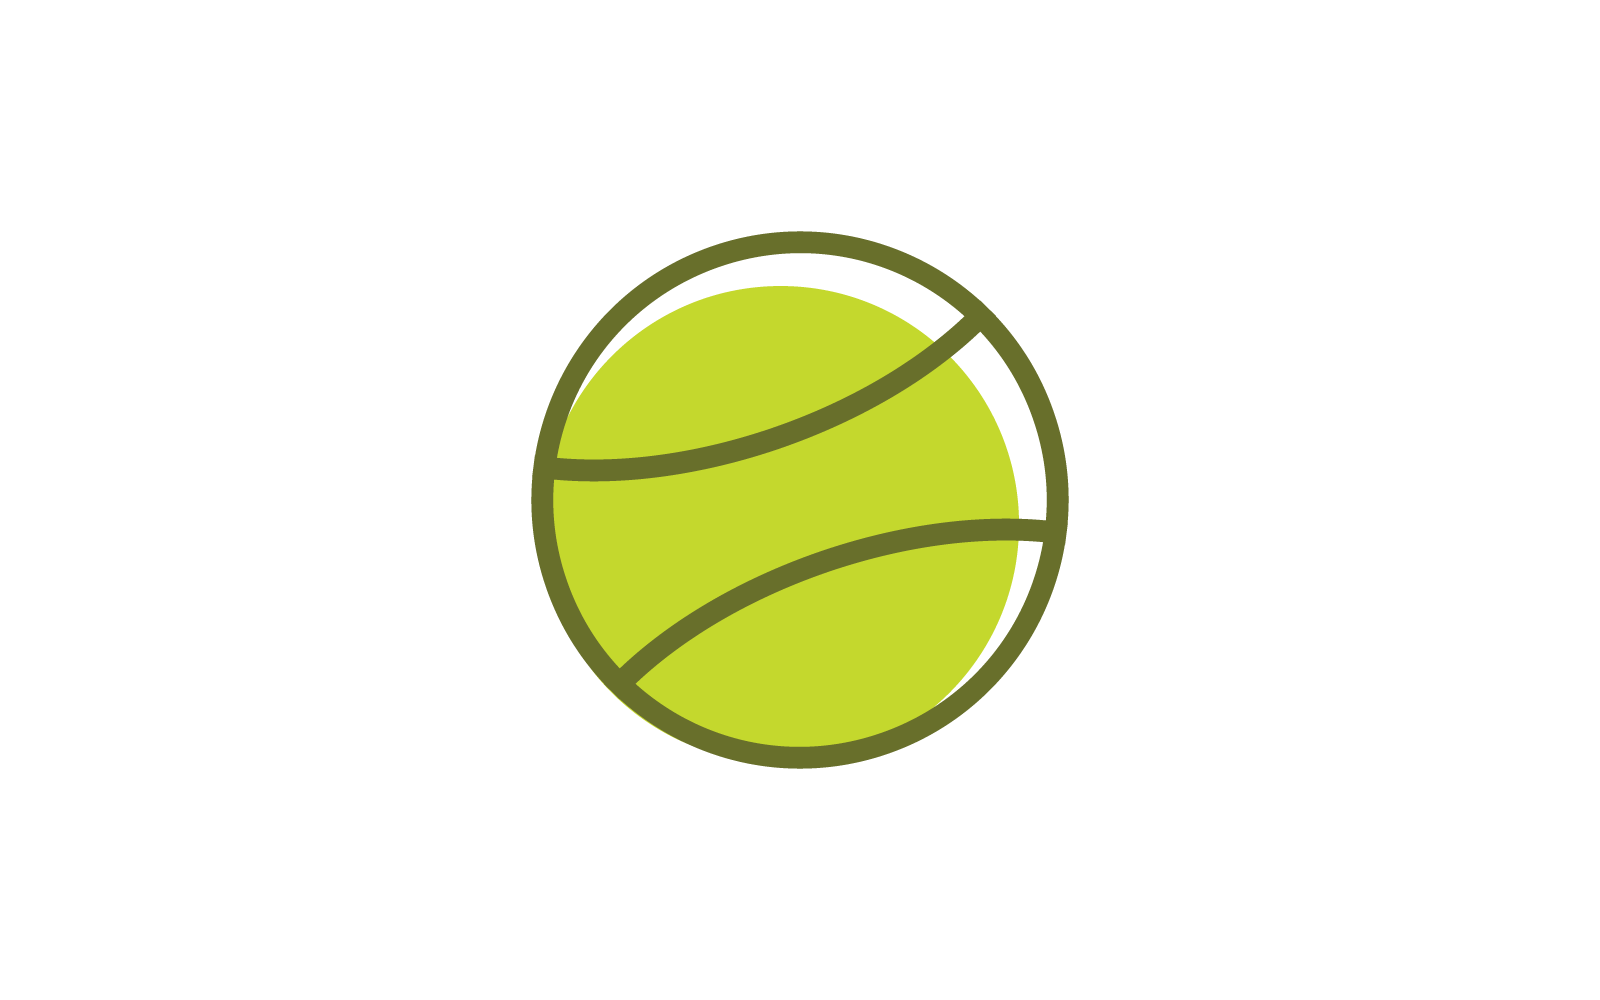 Tennisball-Logo-Vektor-flaches Design-Illustrationsvorlage